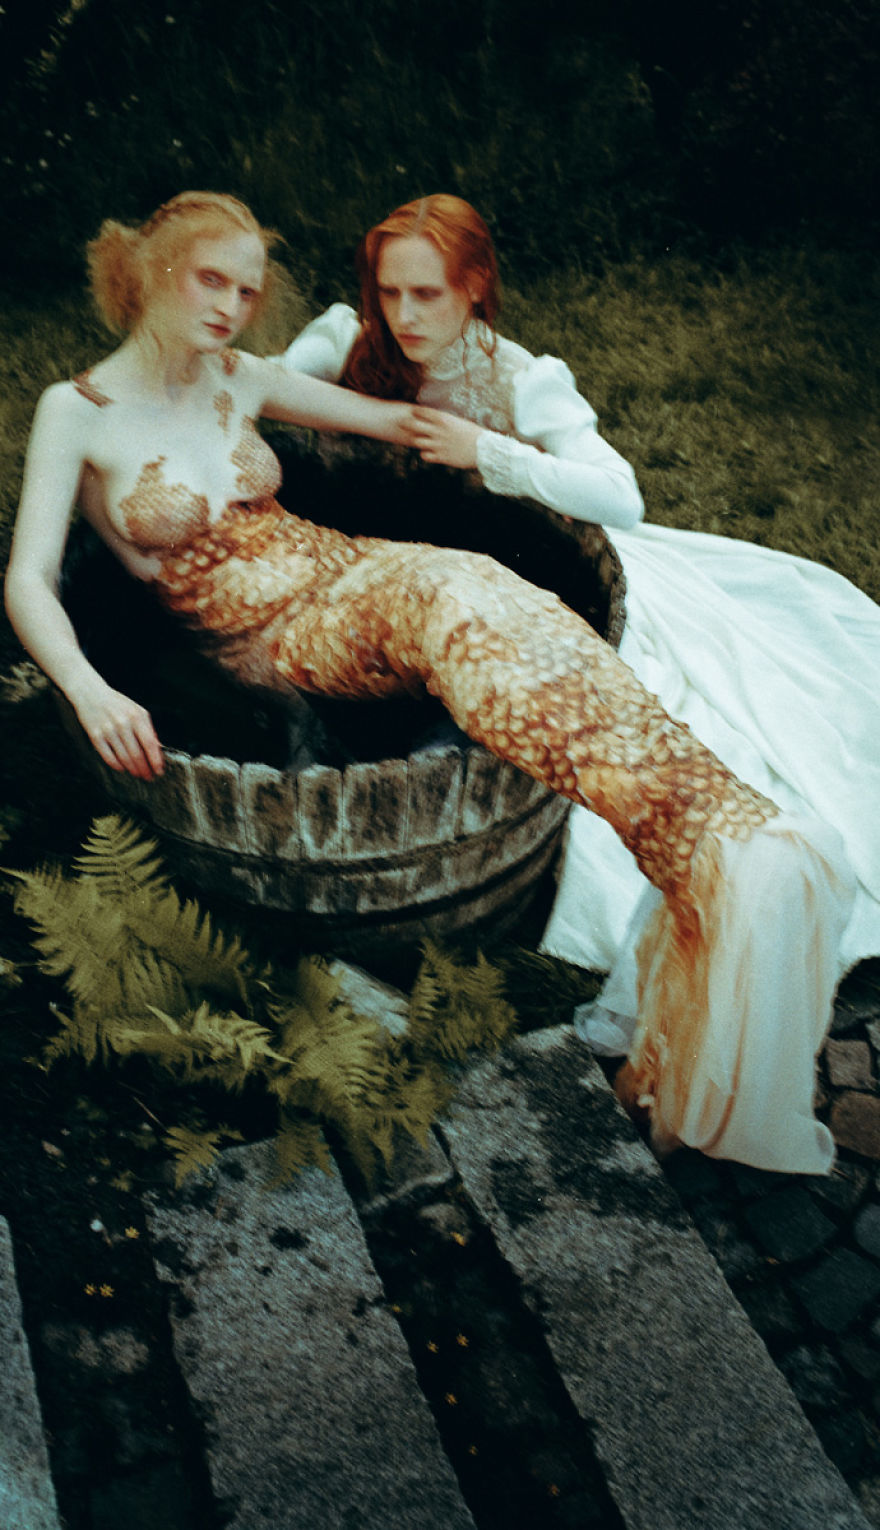 Fairy Tale "The Little Mermaid" Shot On Film